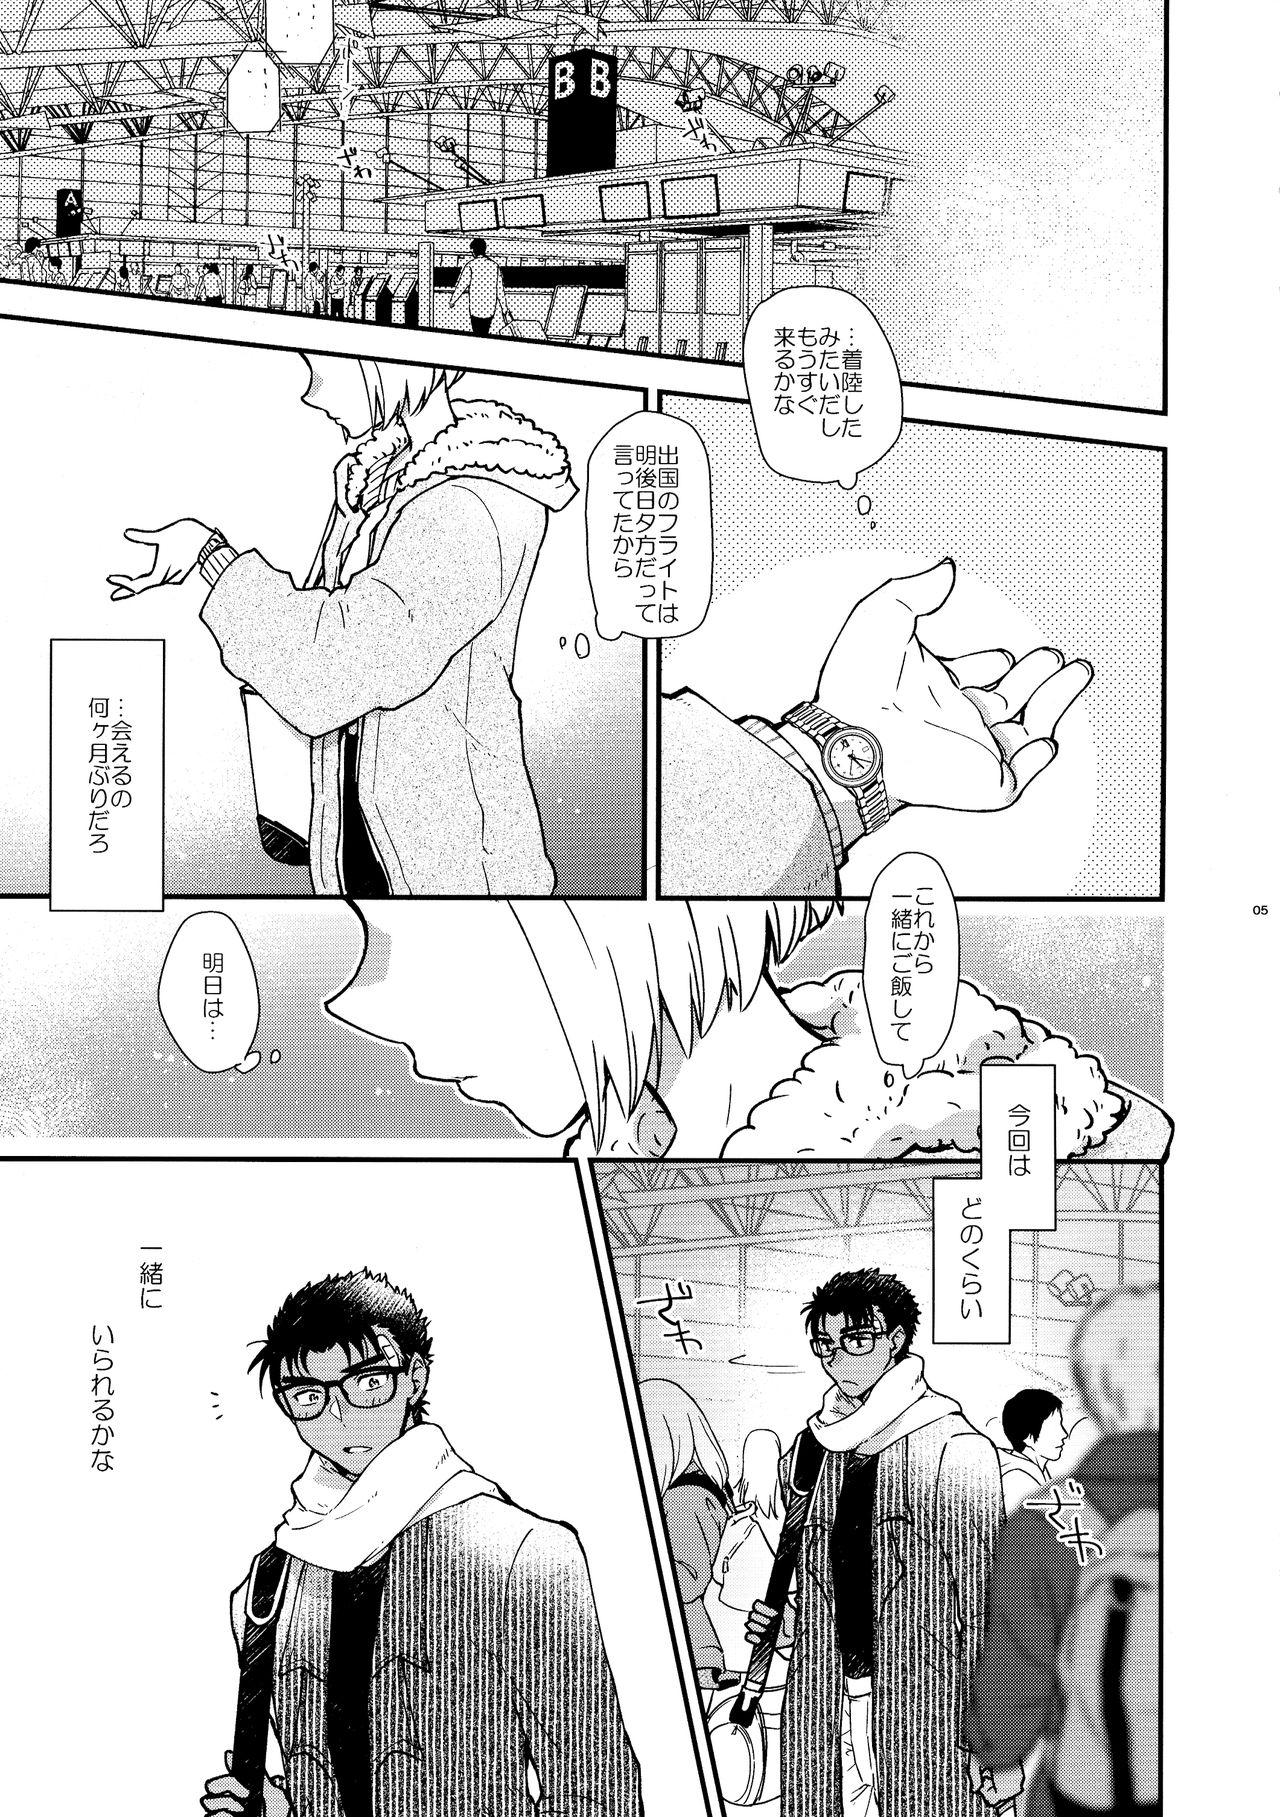 Behind Oboreru 48-jikan - Detective conan Smooth - Page 5